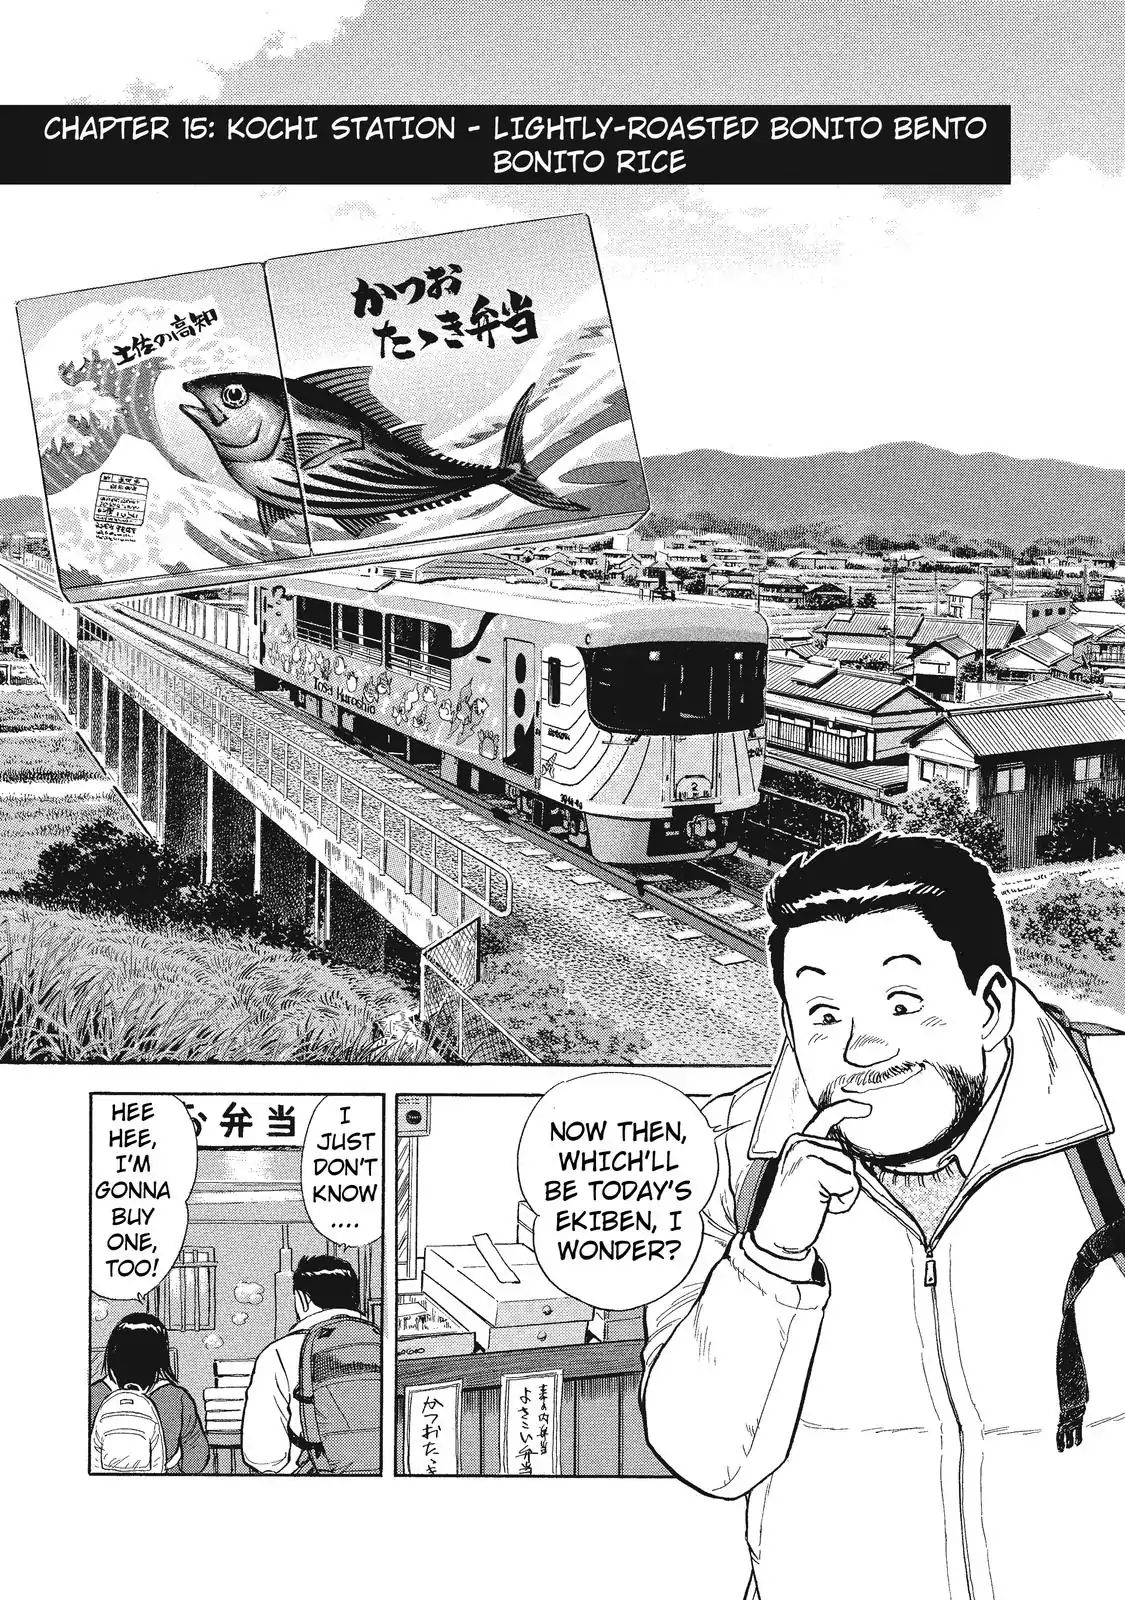 Ekiben Hitoritabi Vol.2 Chapter 15: Kochi Station - Lightly-Roasted Bonito Bento, Bonito Rice